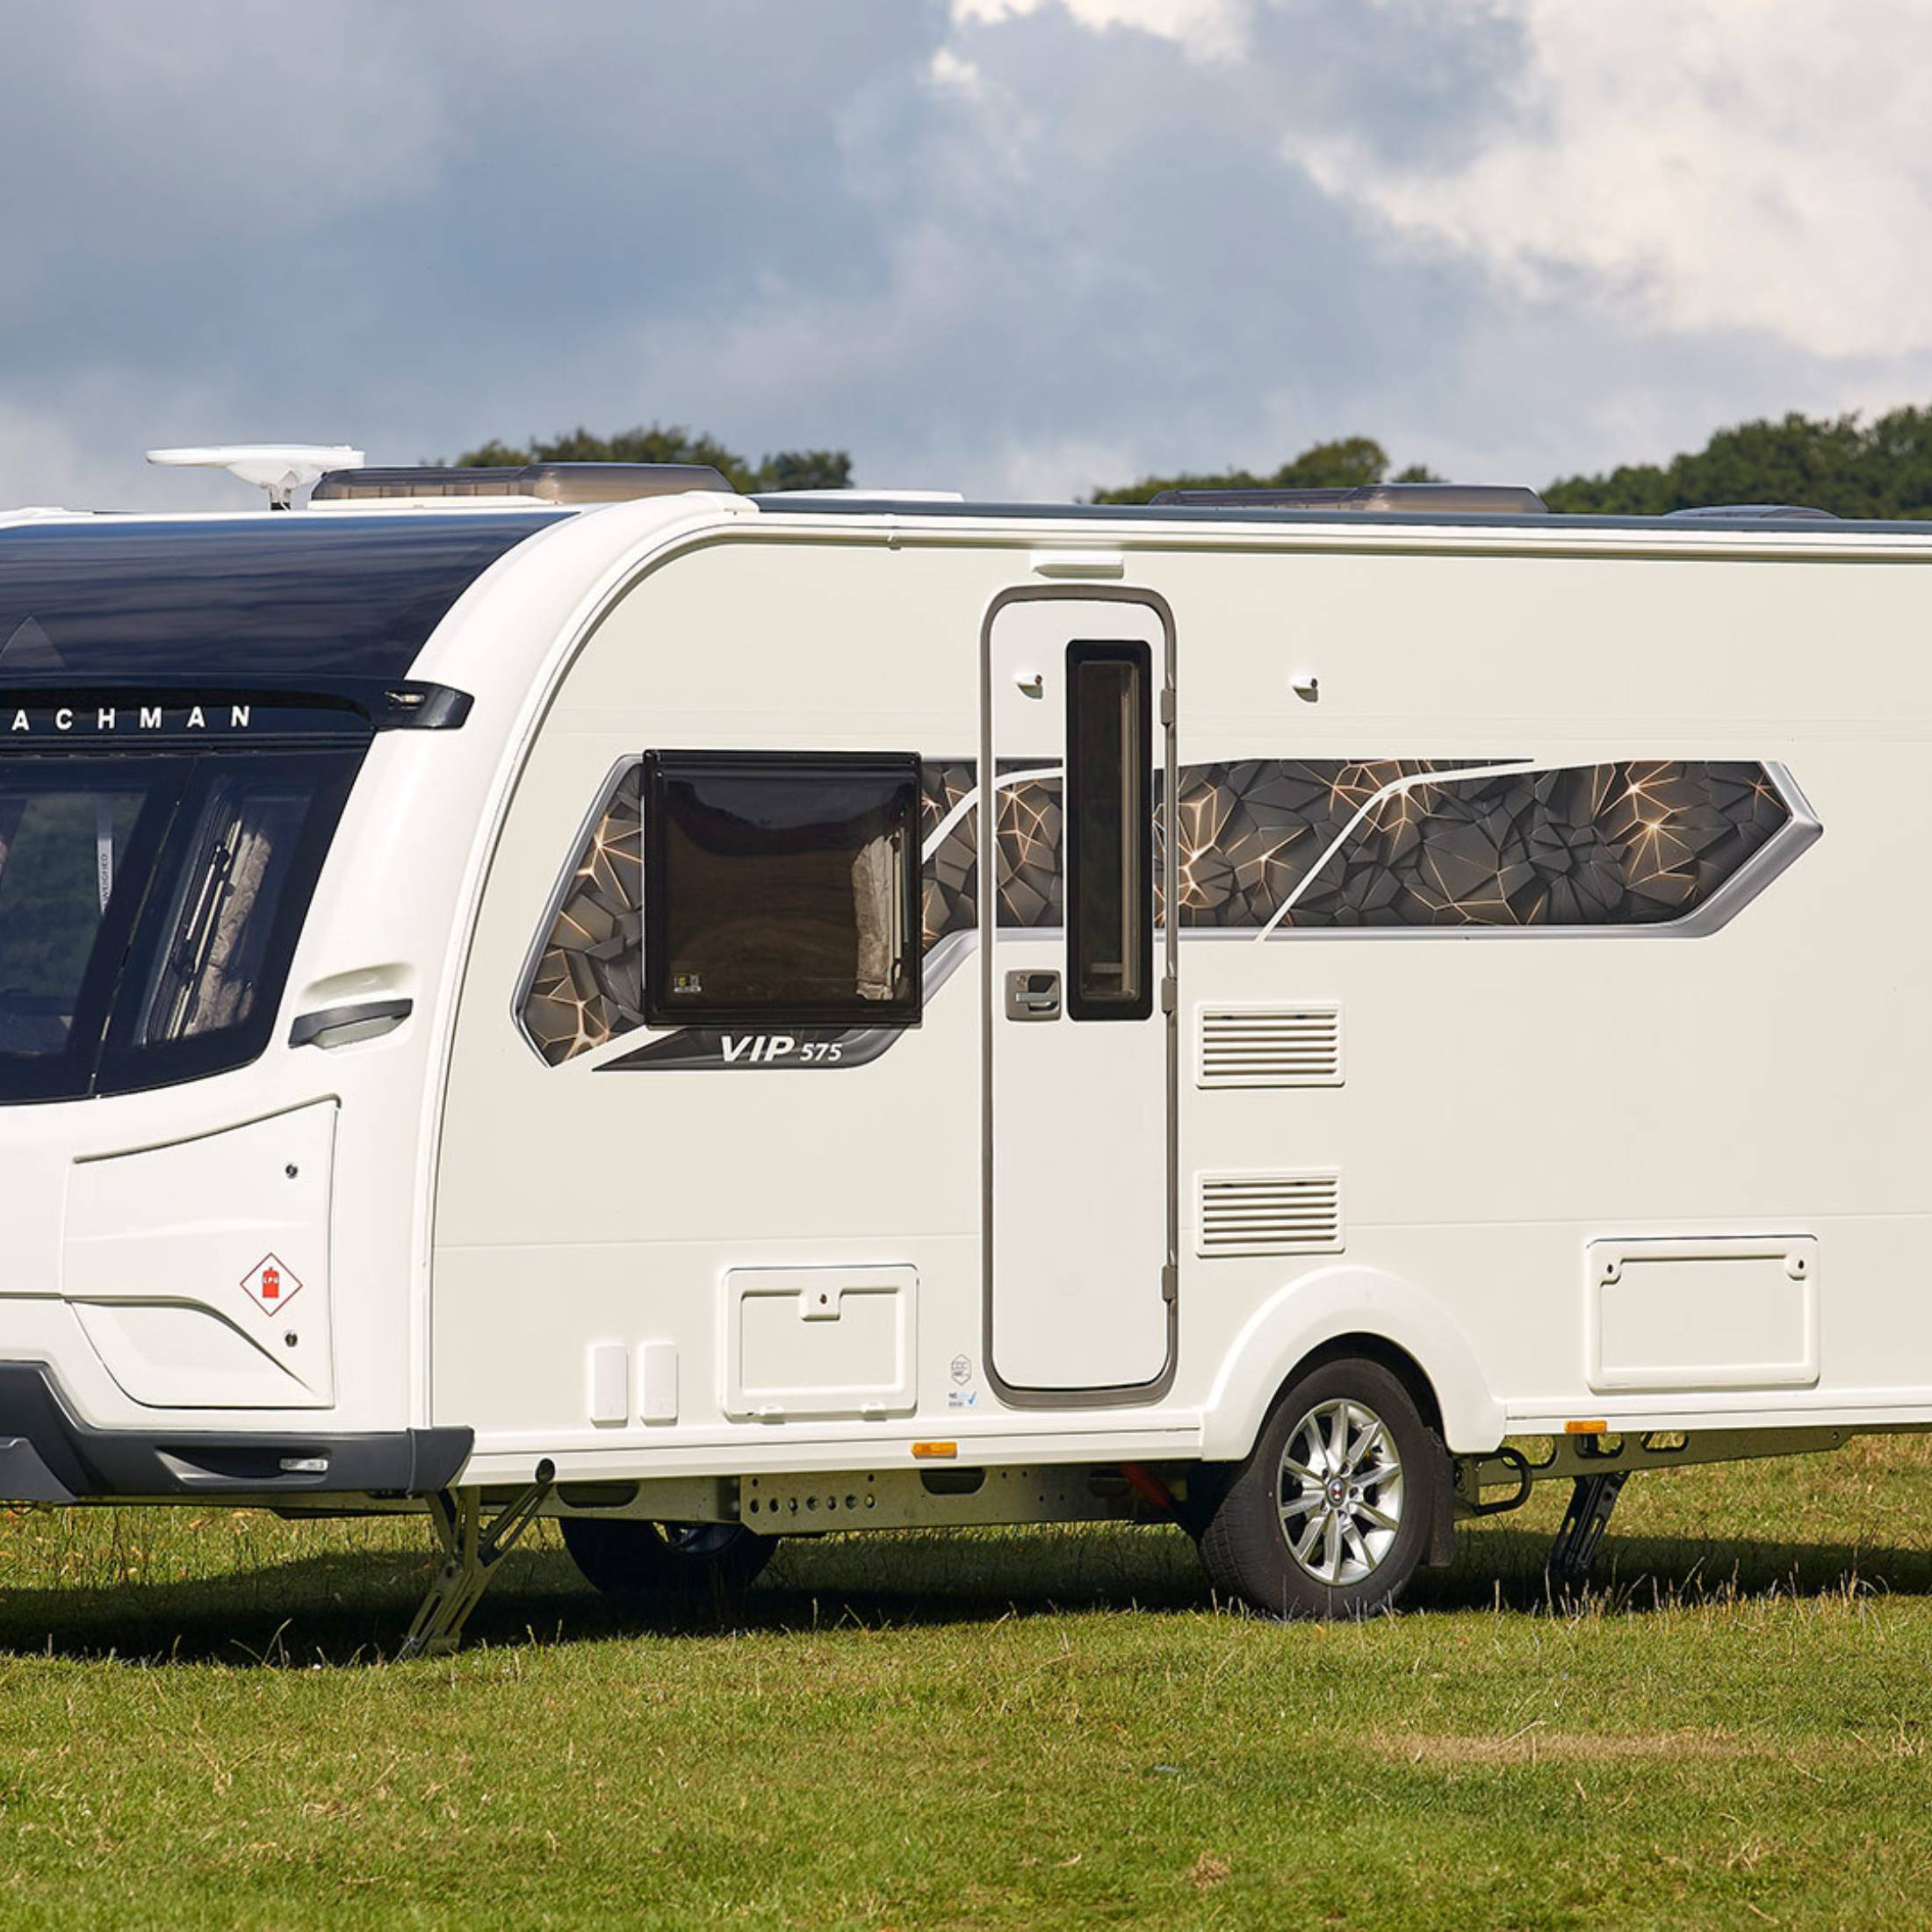 Coachman 575 VIP Caravan - Review Profile Image